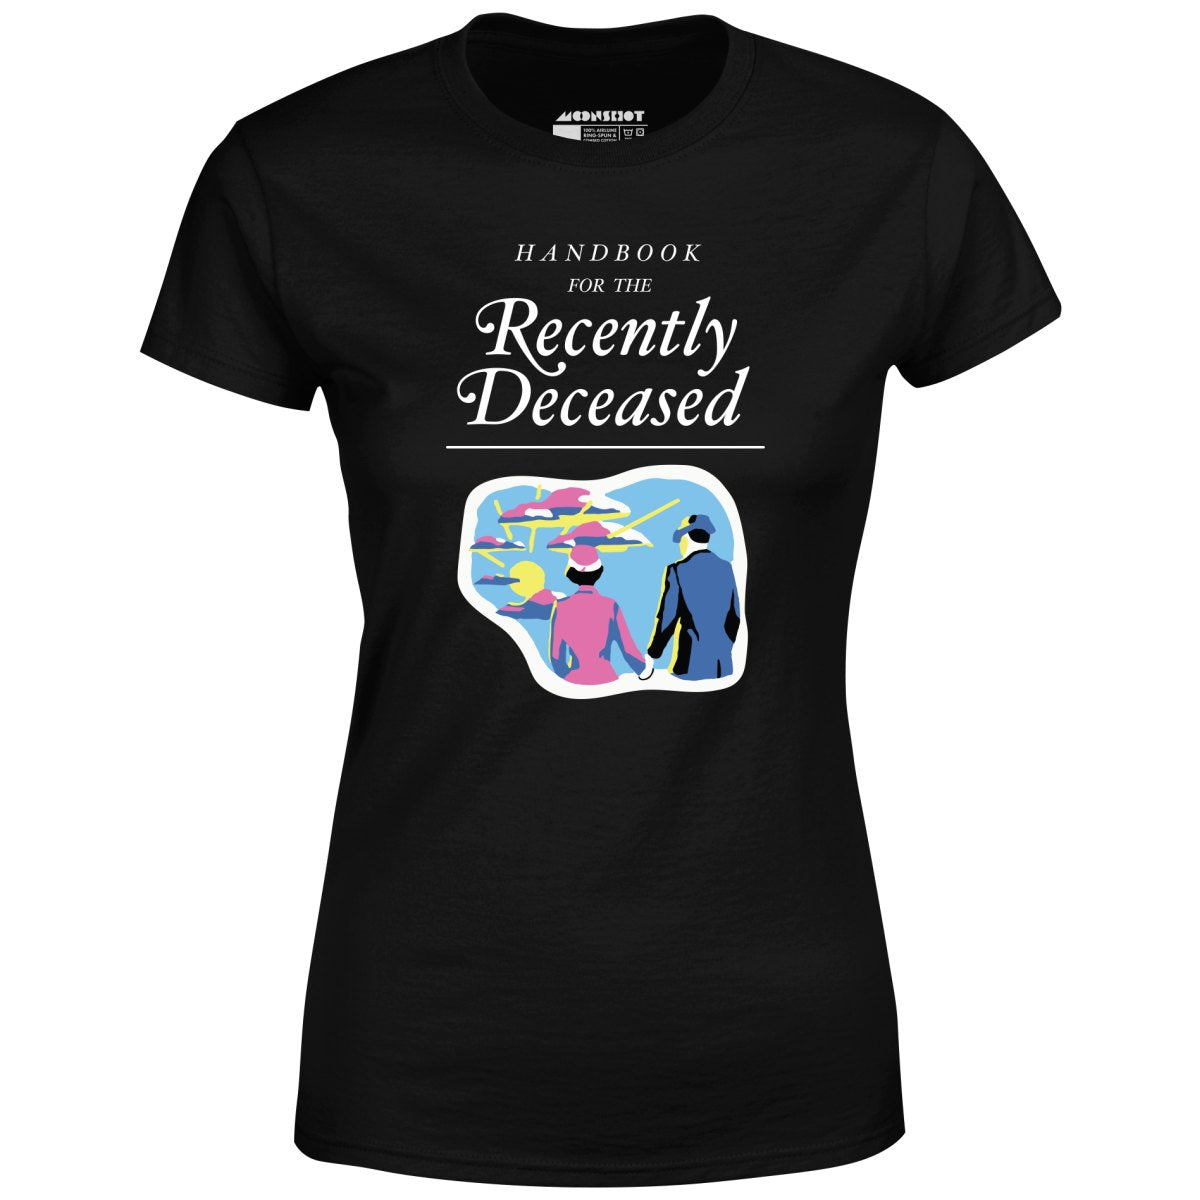 Handbook for the Recently Deceased - Women's T-Shirt